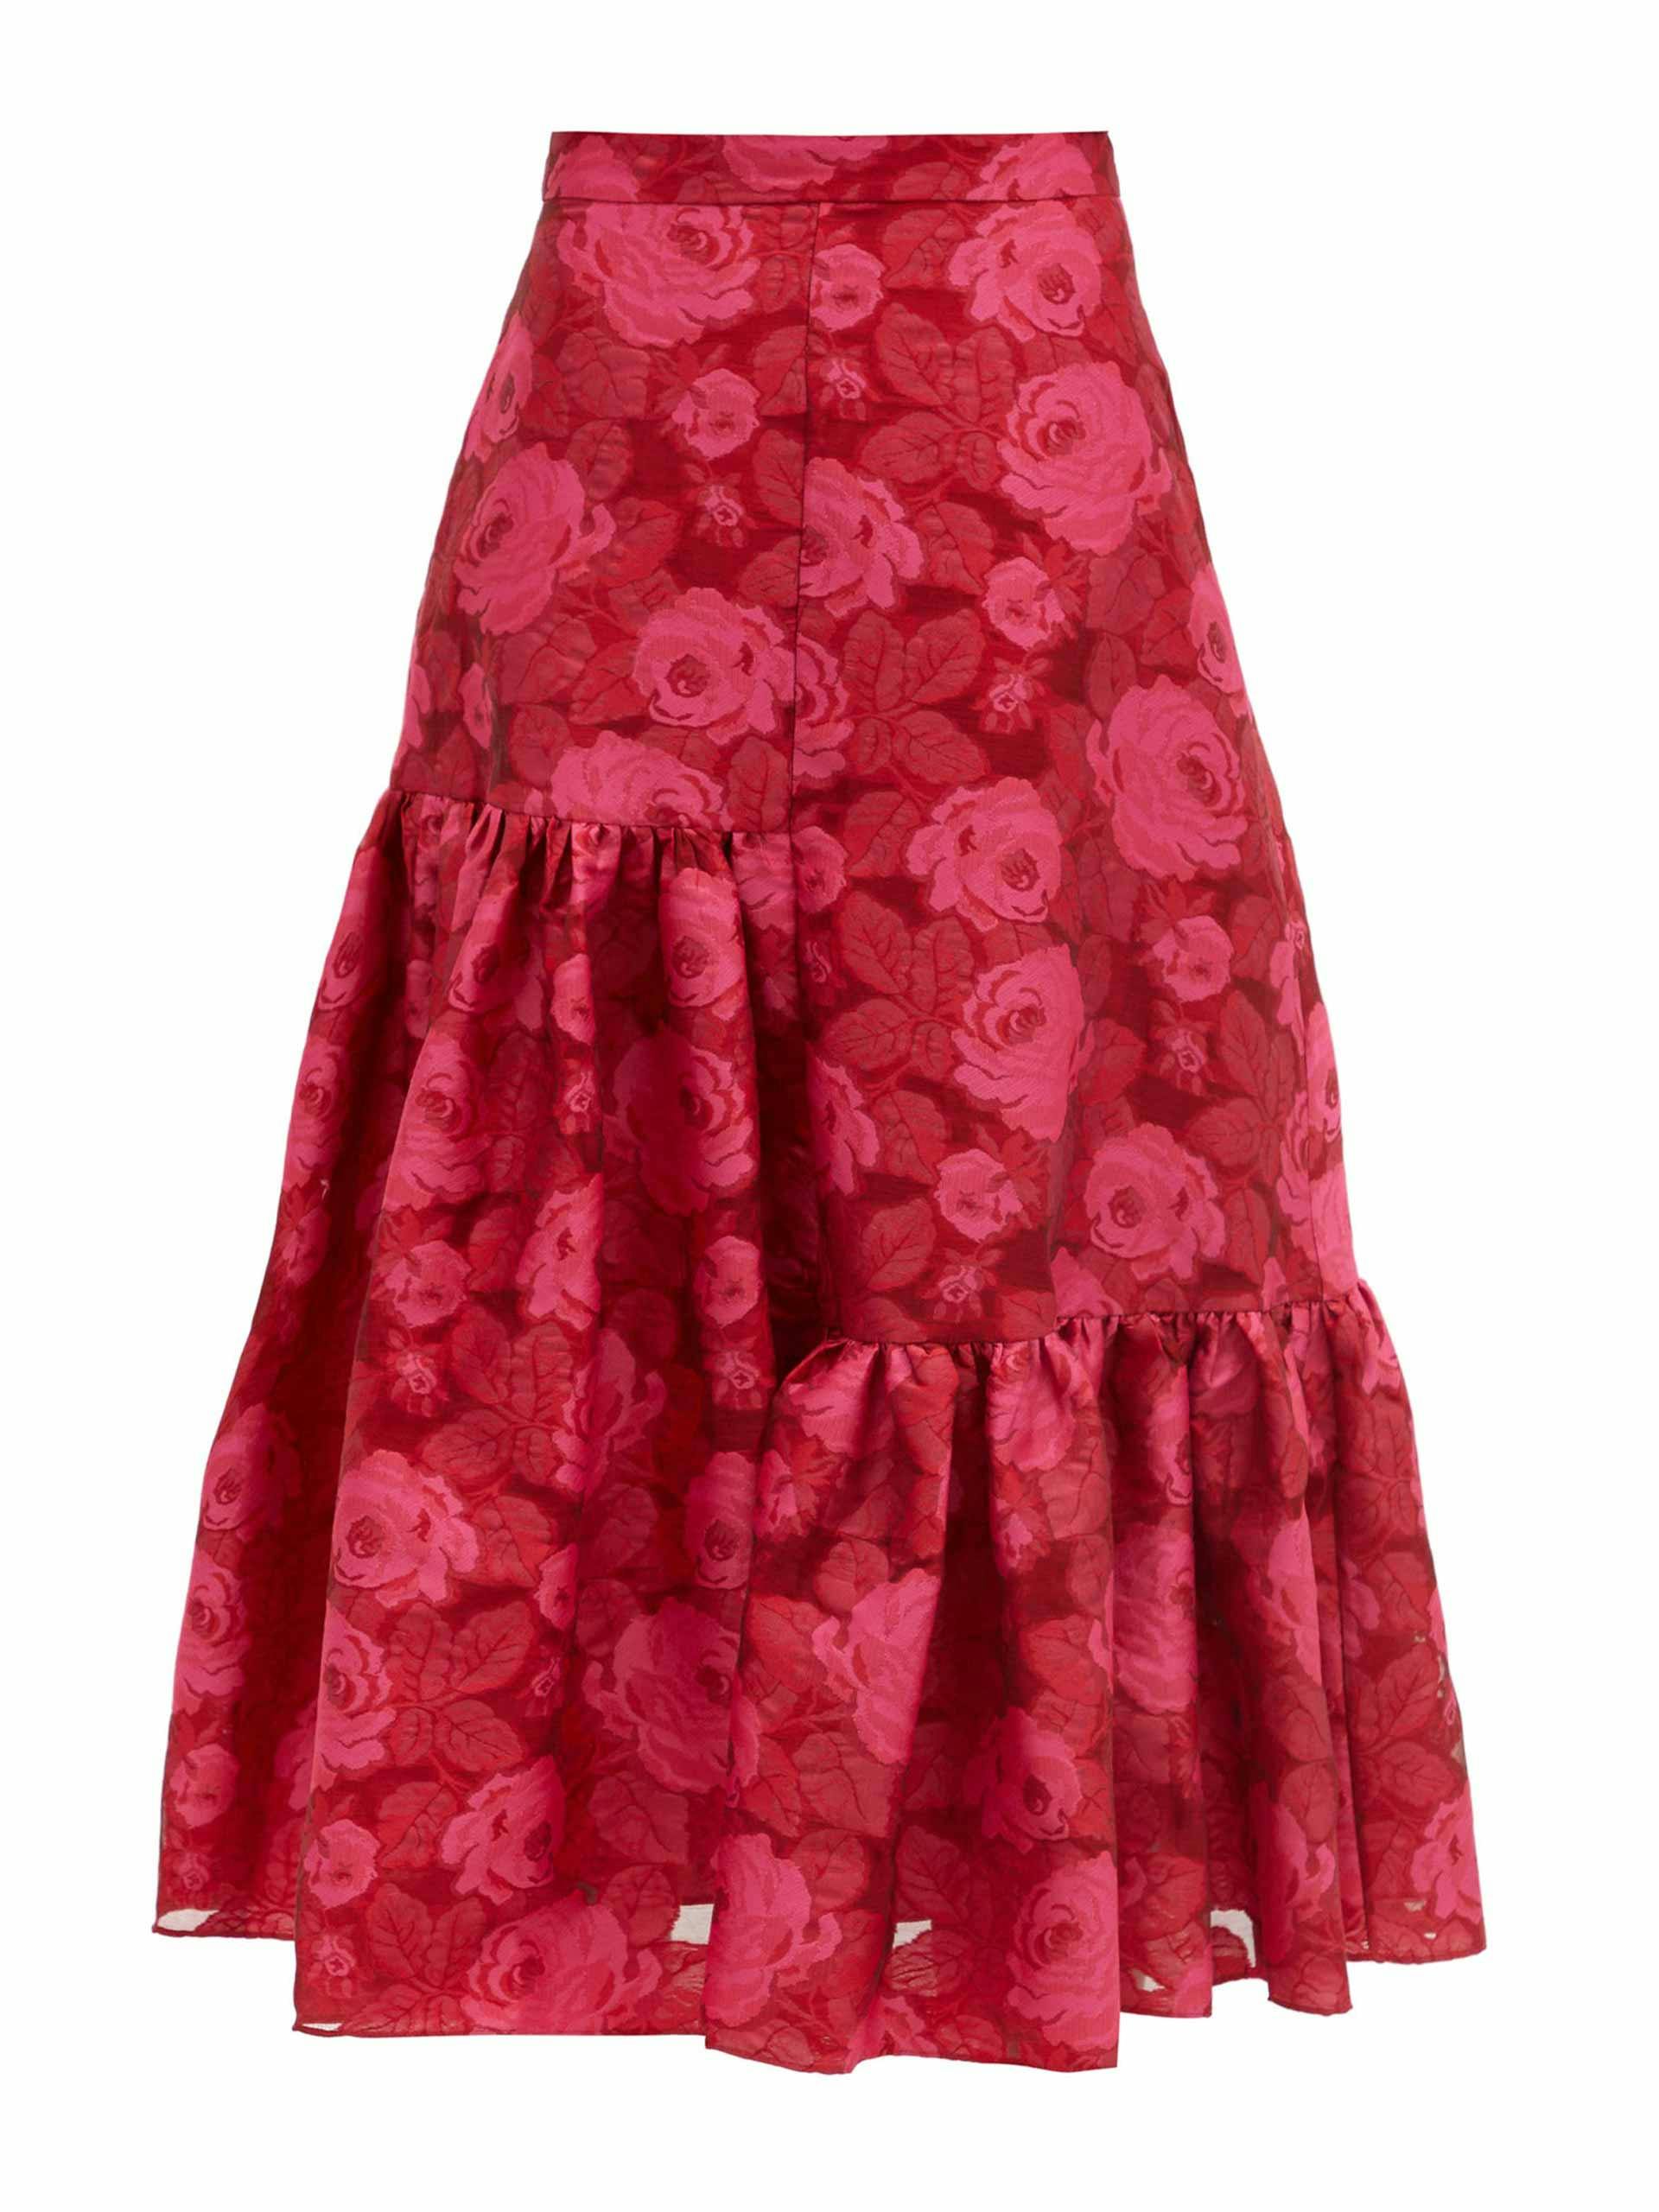 Floral red organza midi skirt